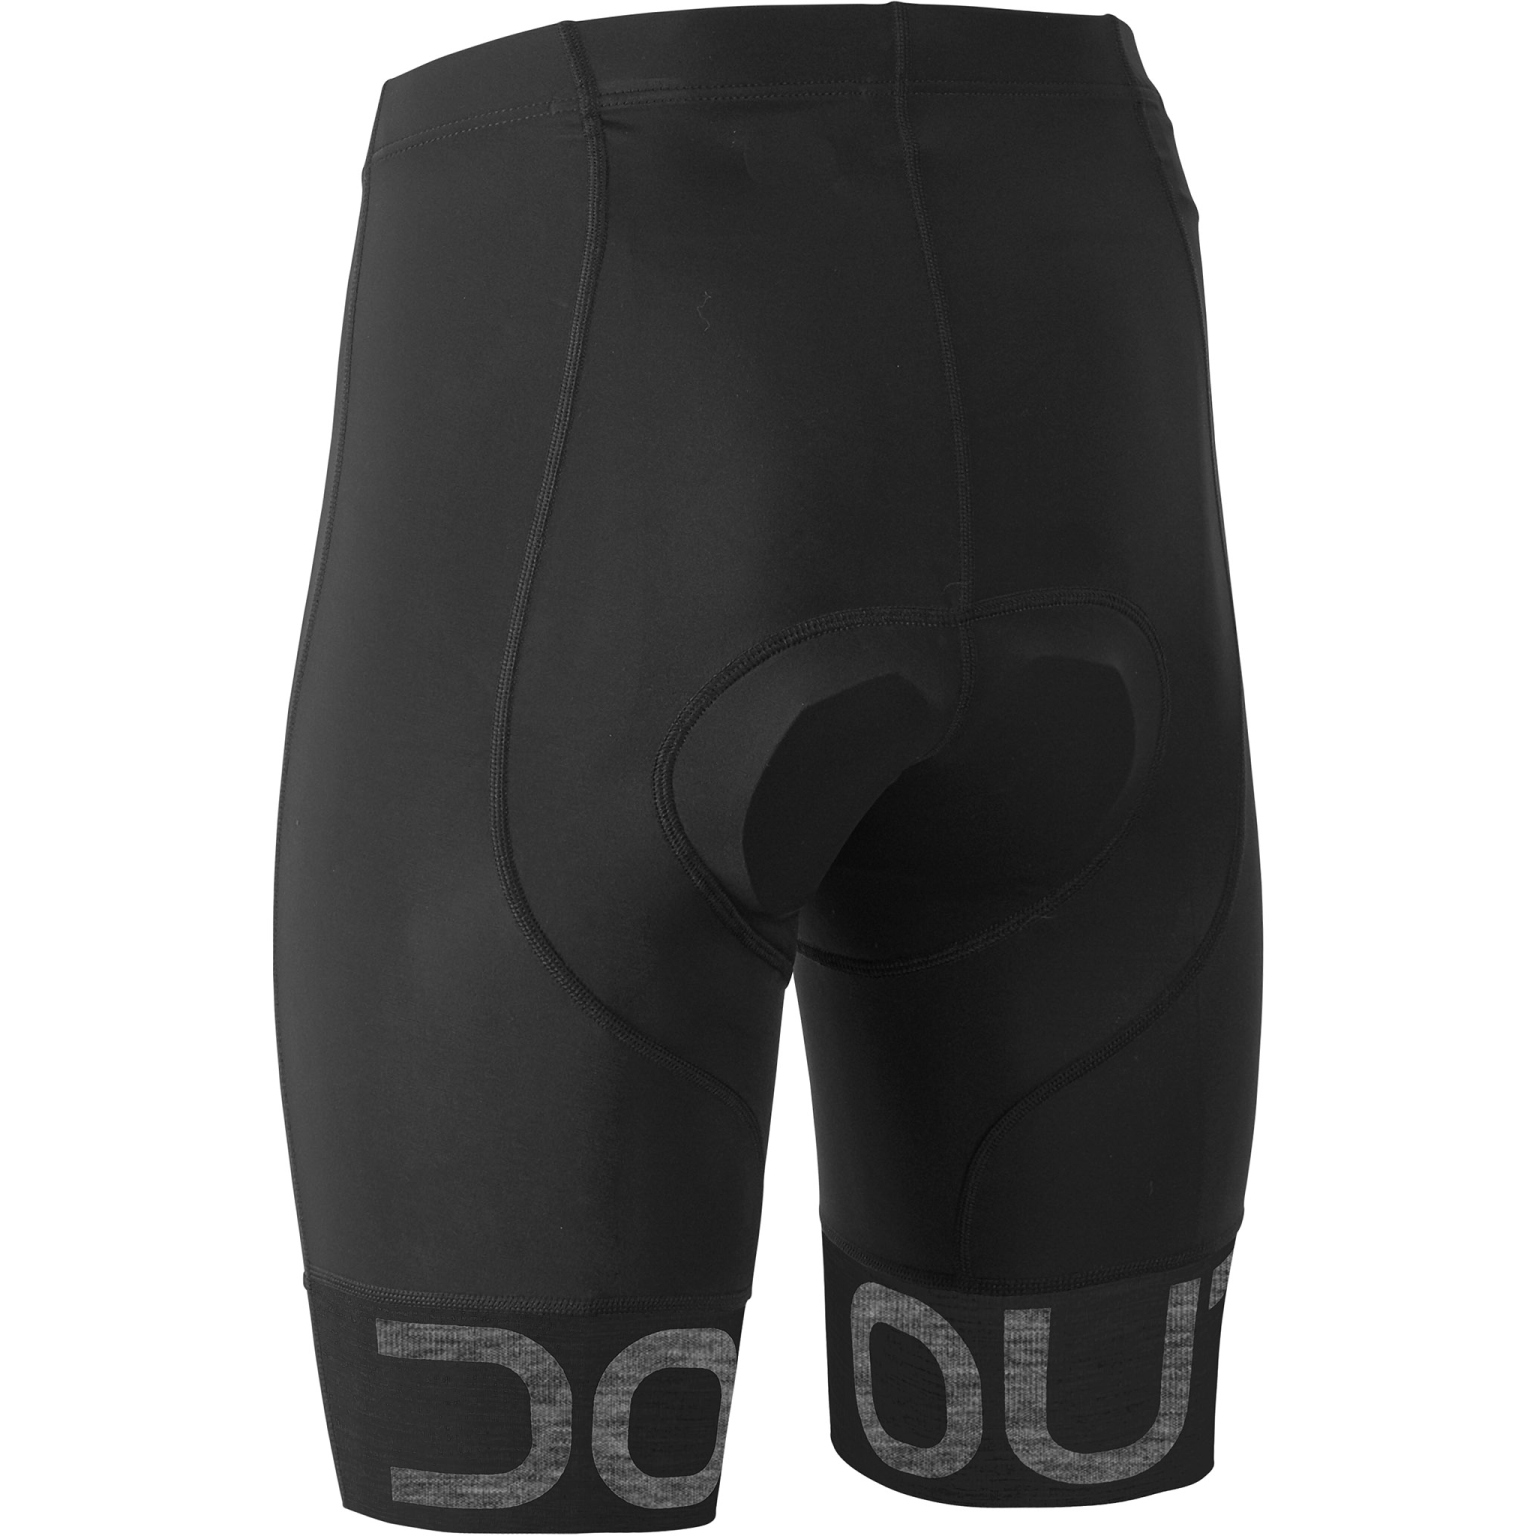 https://images.bike24.com/i/mb/f0/ff/85/dotout-team-shorts-black-black-1-1414713.jpg